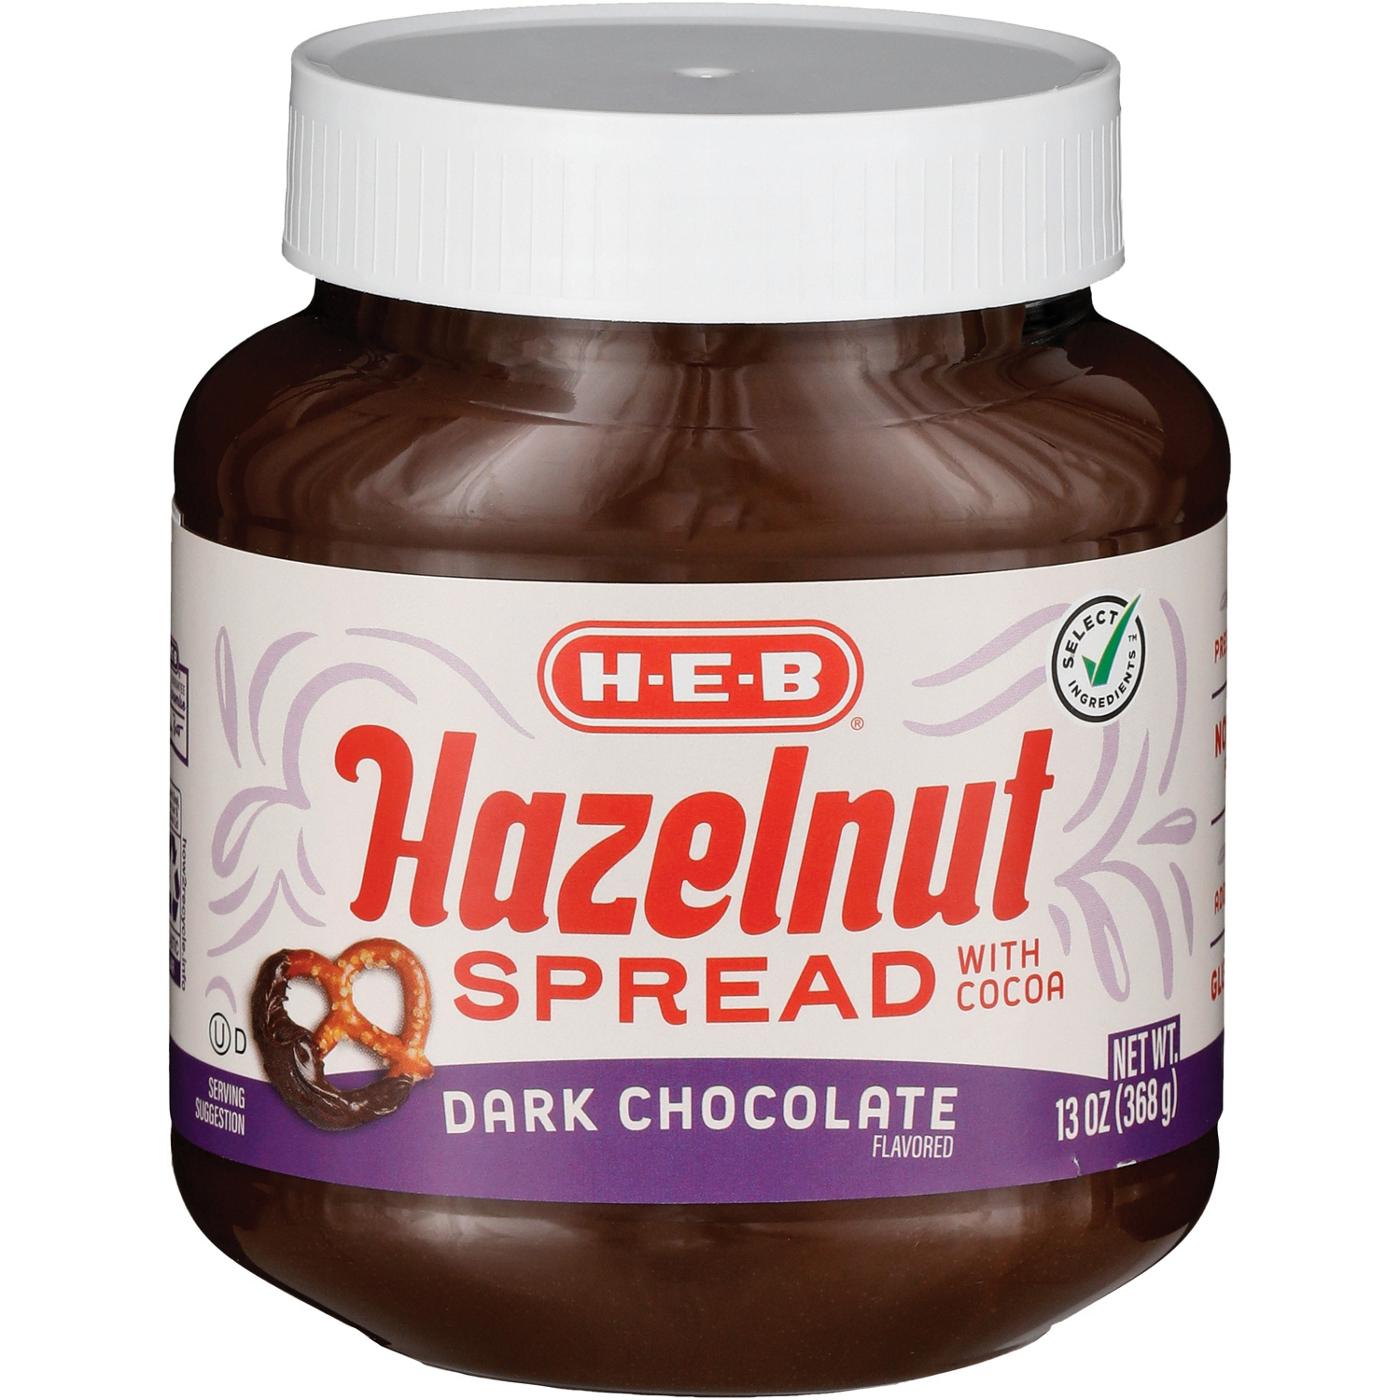 H-E-B Dark Chocolate Hazelnut Spread with Cocoa; image 2 of 2